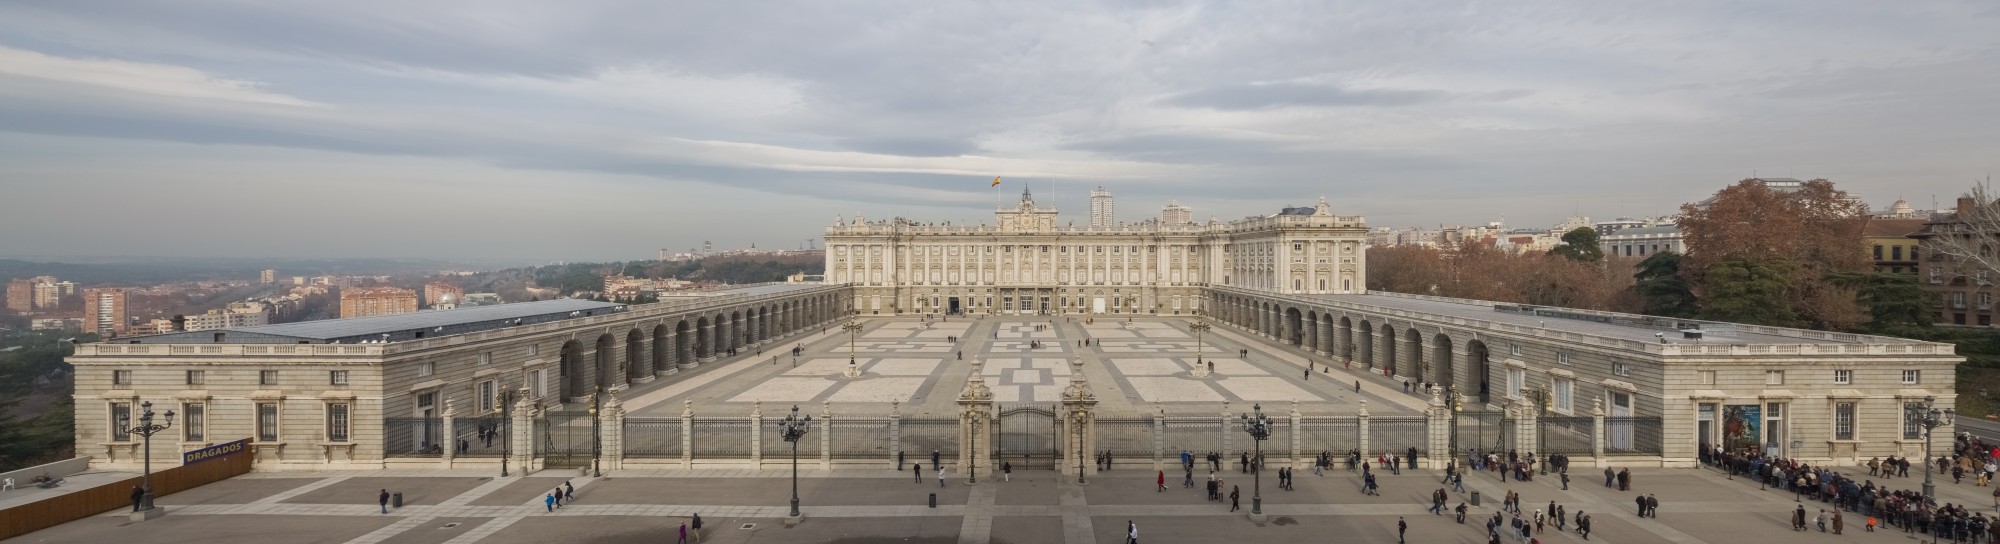 Palacio Real, Madrid, España, 2014-12-27, DD 15-17 PAN